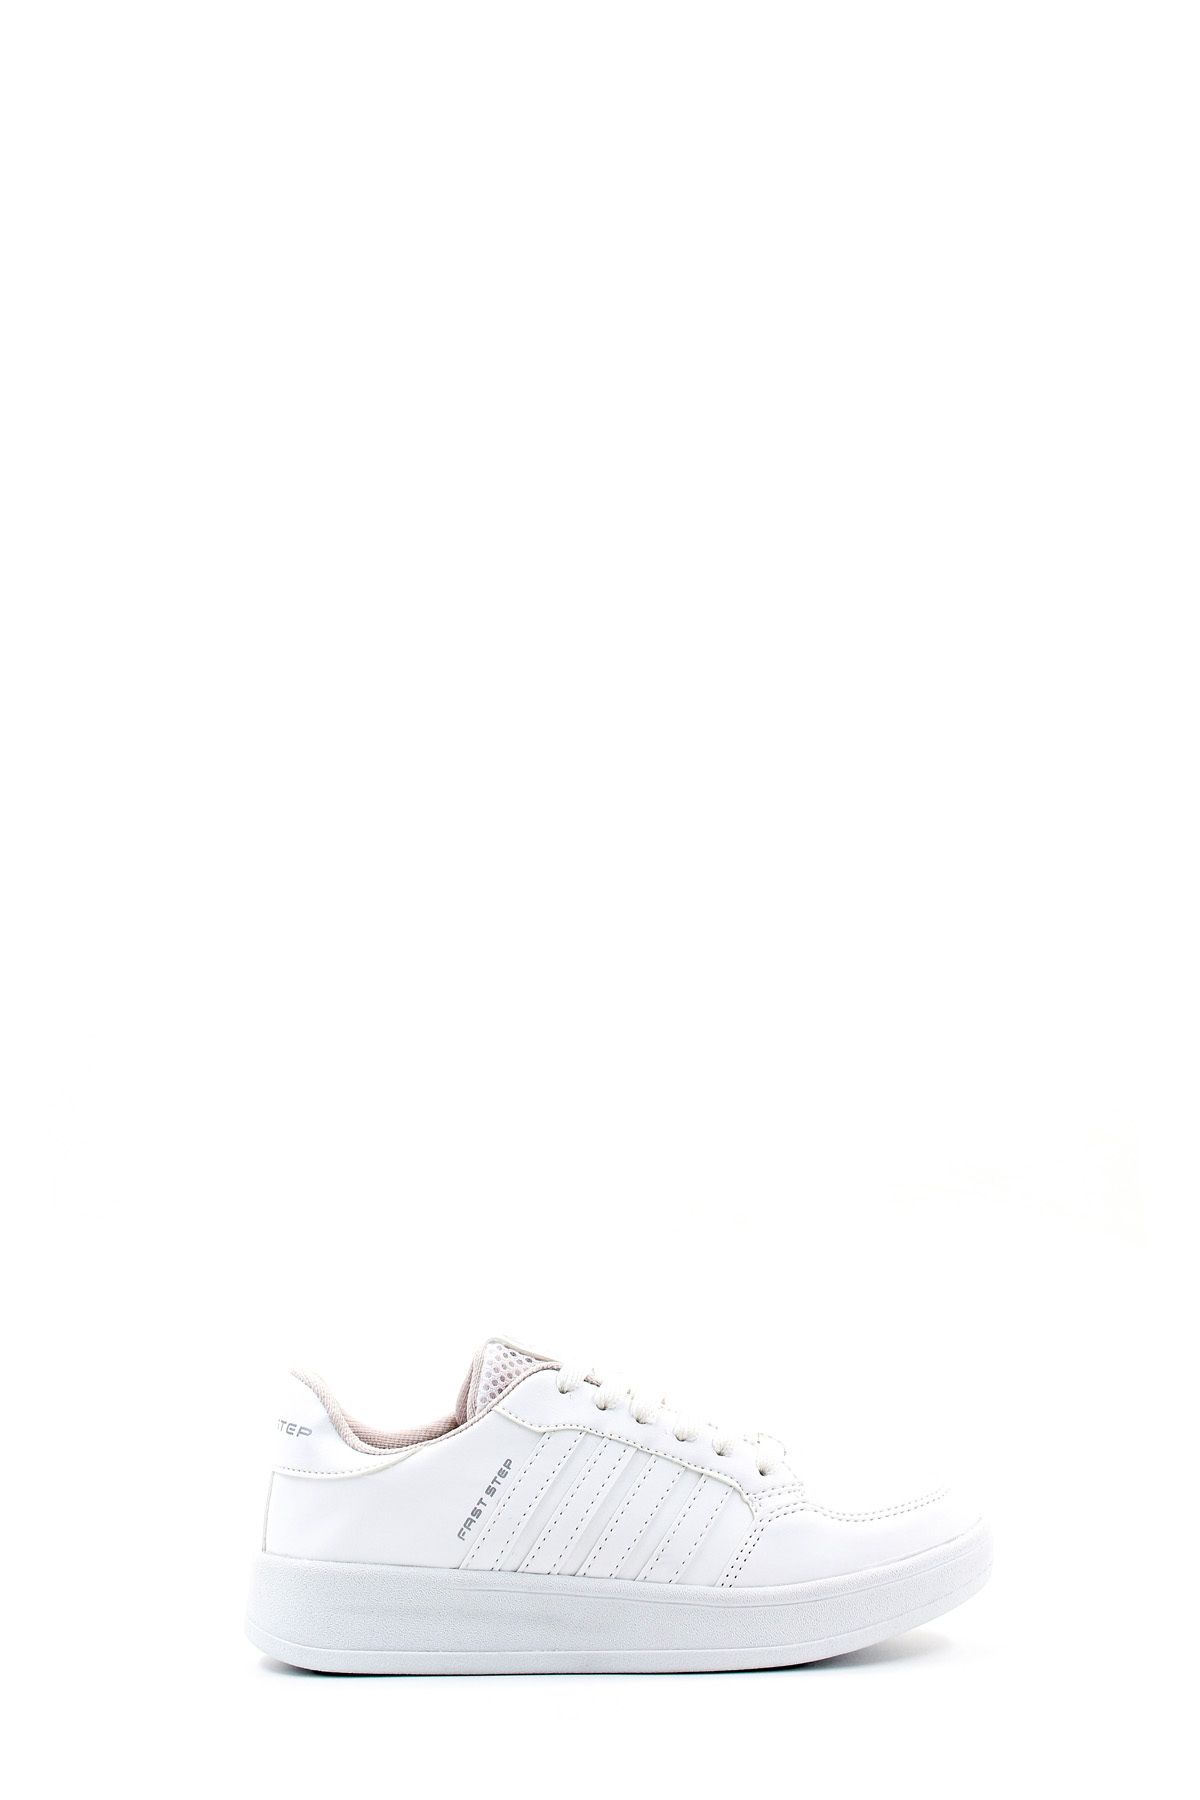 Fast Step Unisex Günlük Rahat Yürüyüş Sneaker Battal Boy Hafif Ayakkabı 930mba019